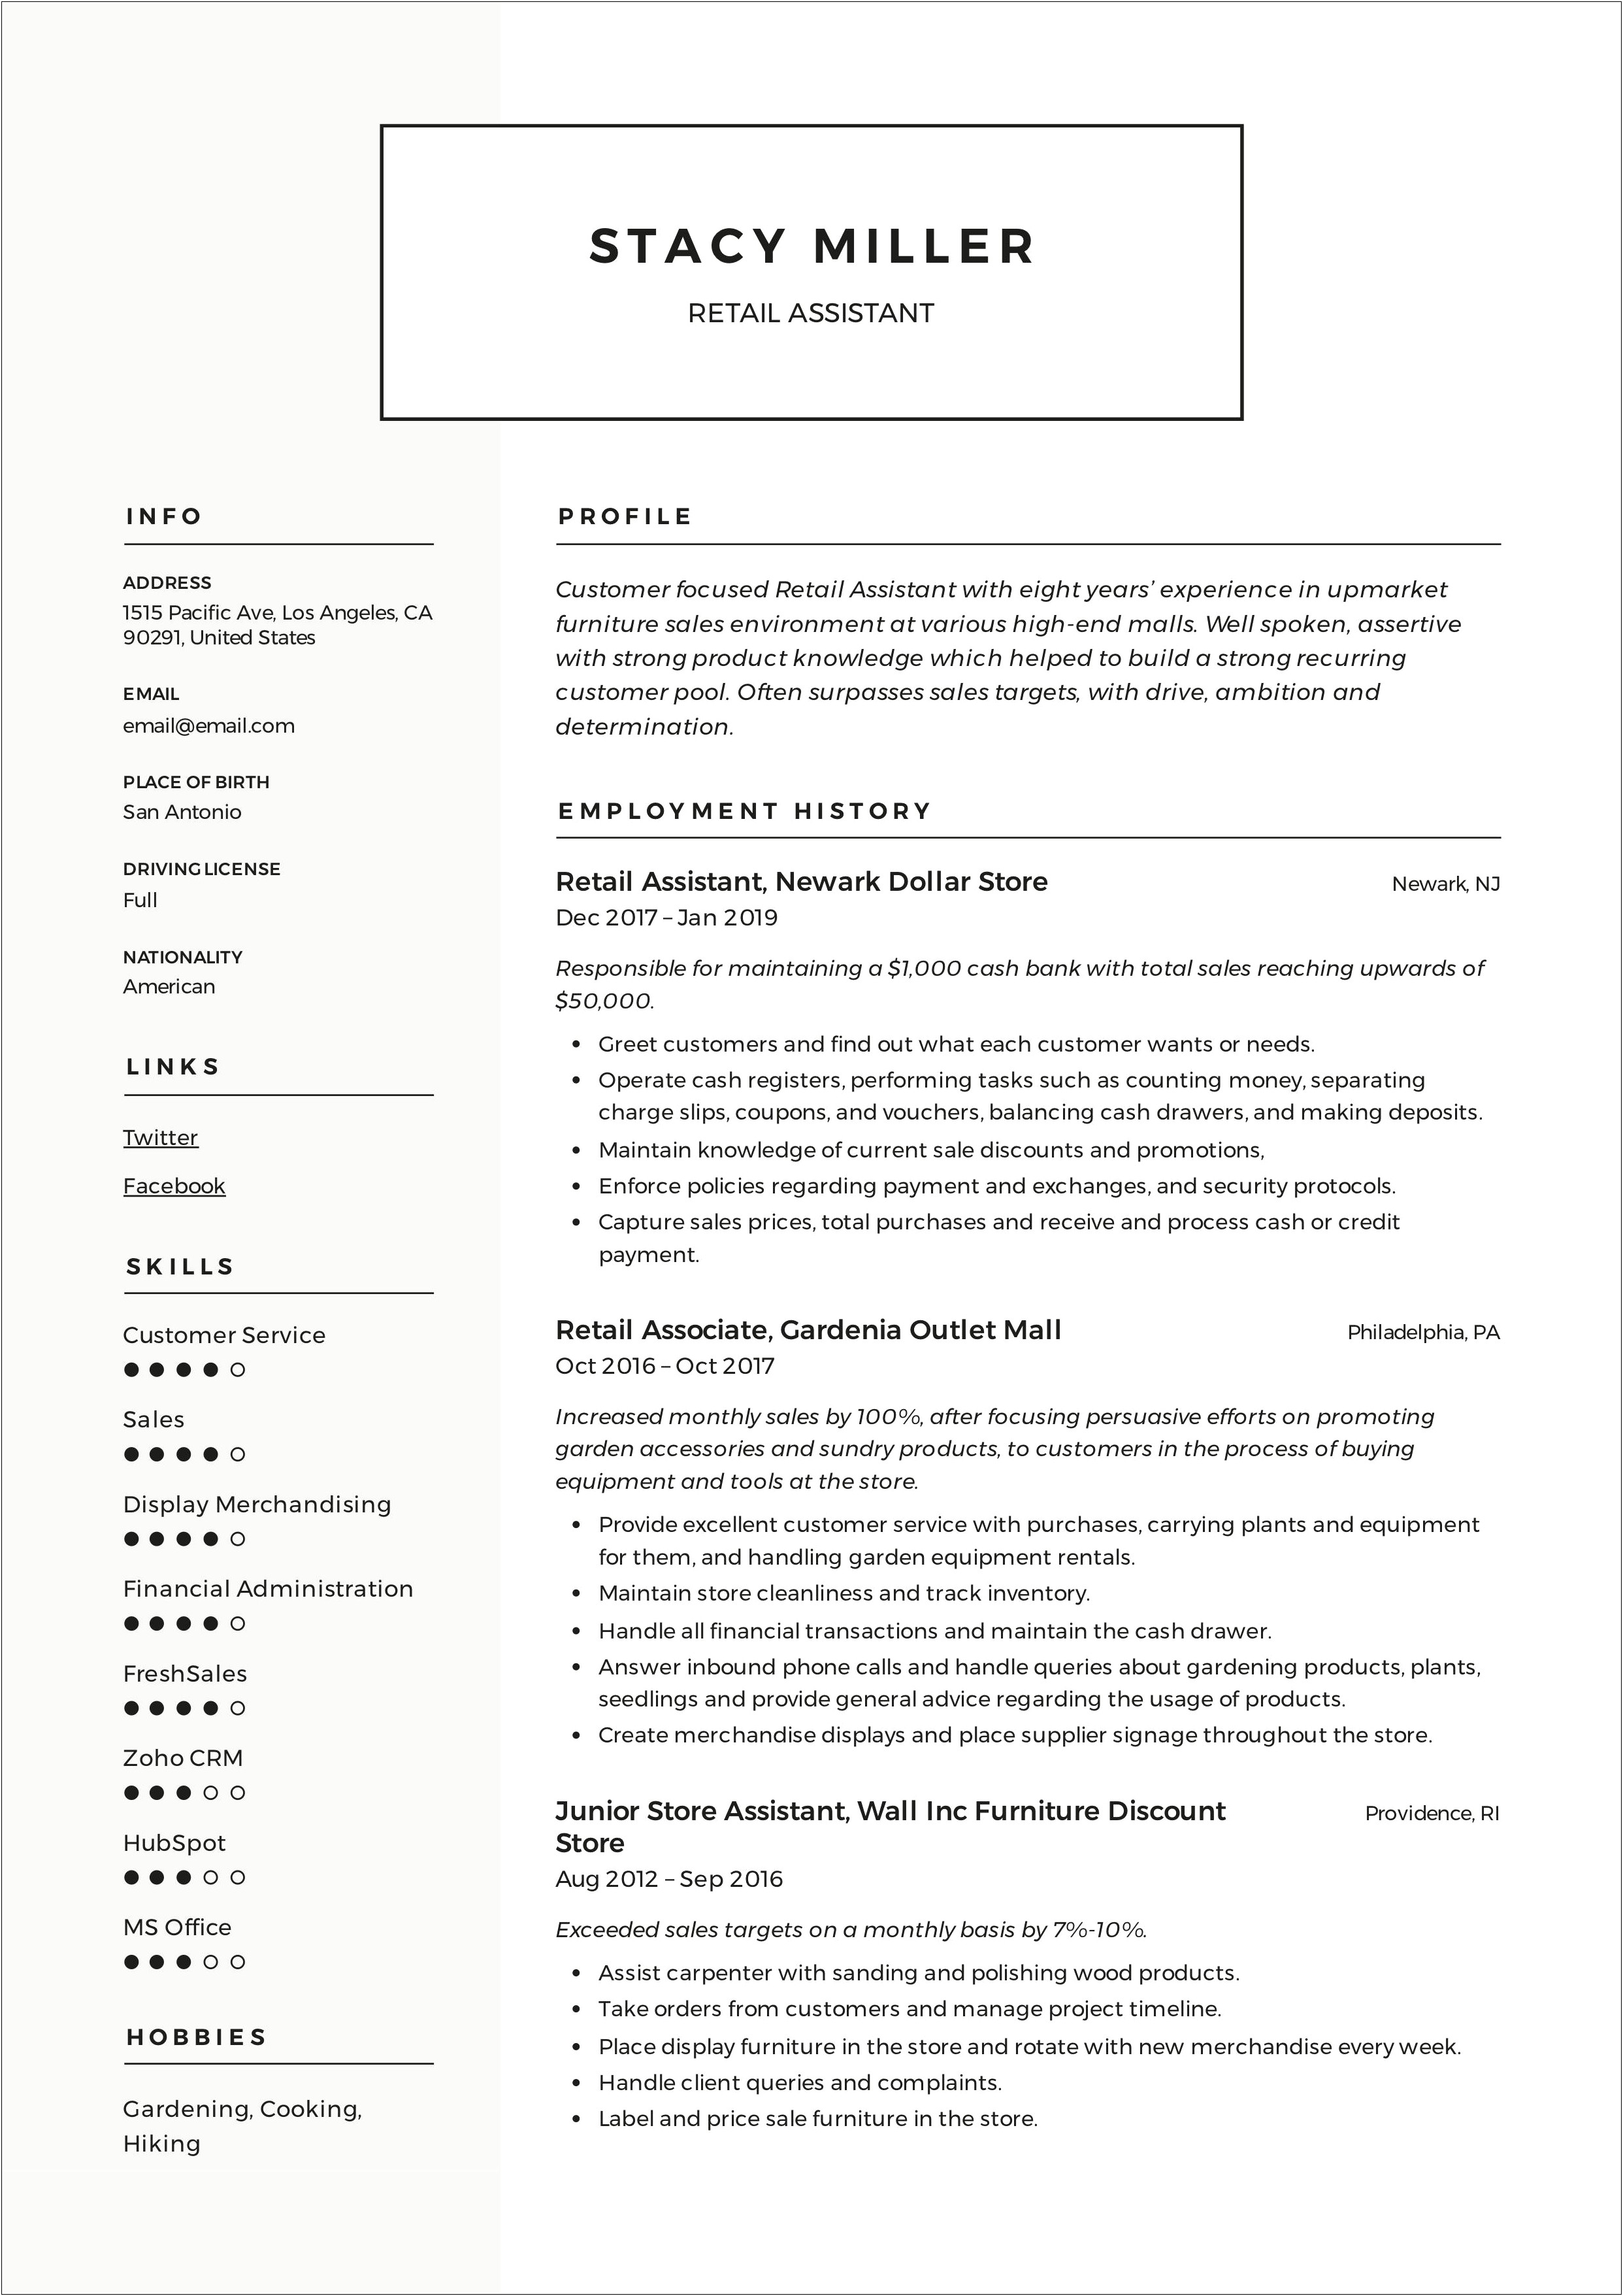 Sample Resume For Aldi Retail Assistant